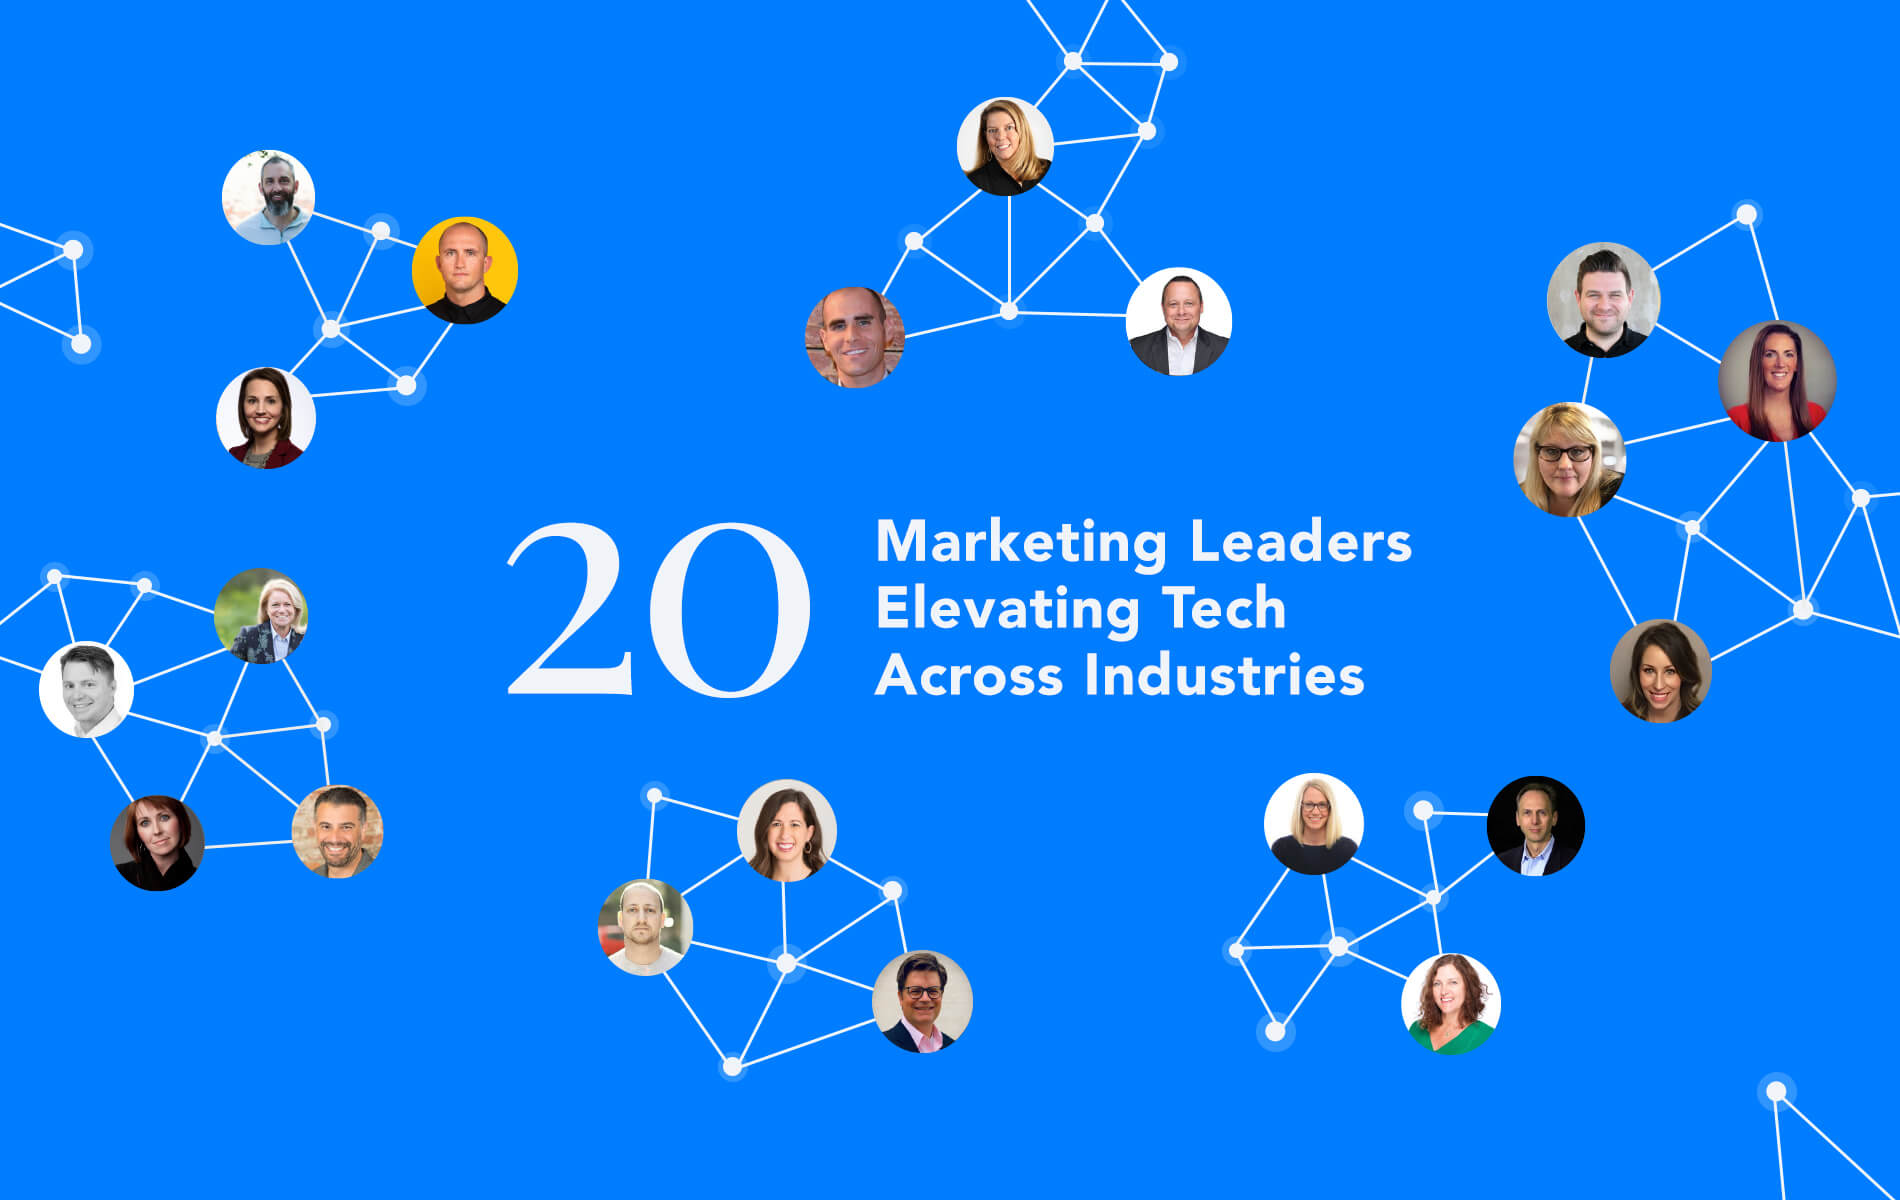 Twenty Marketing Leaders Elevating Tech Across Industries